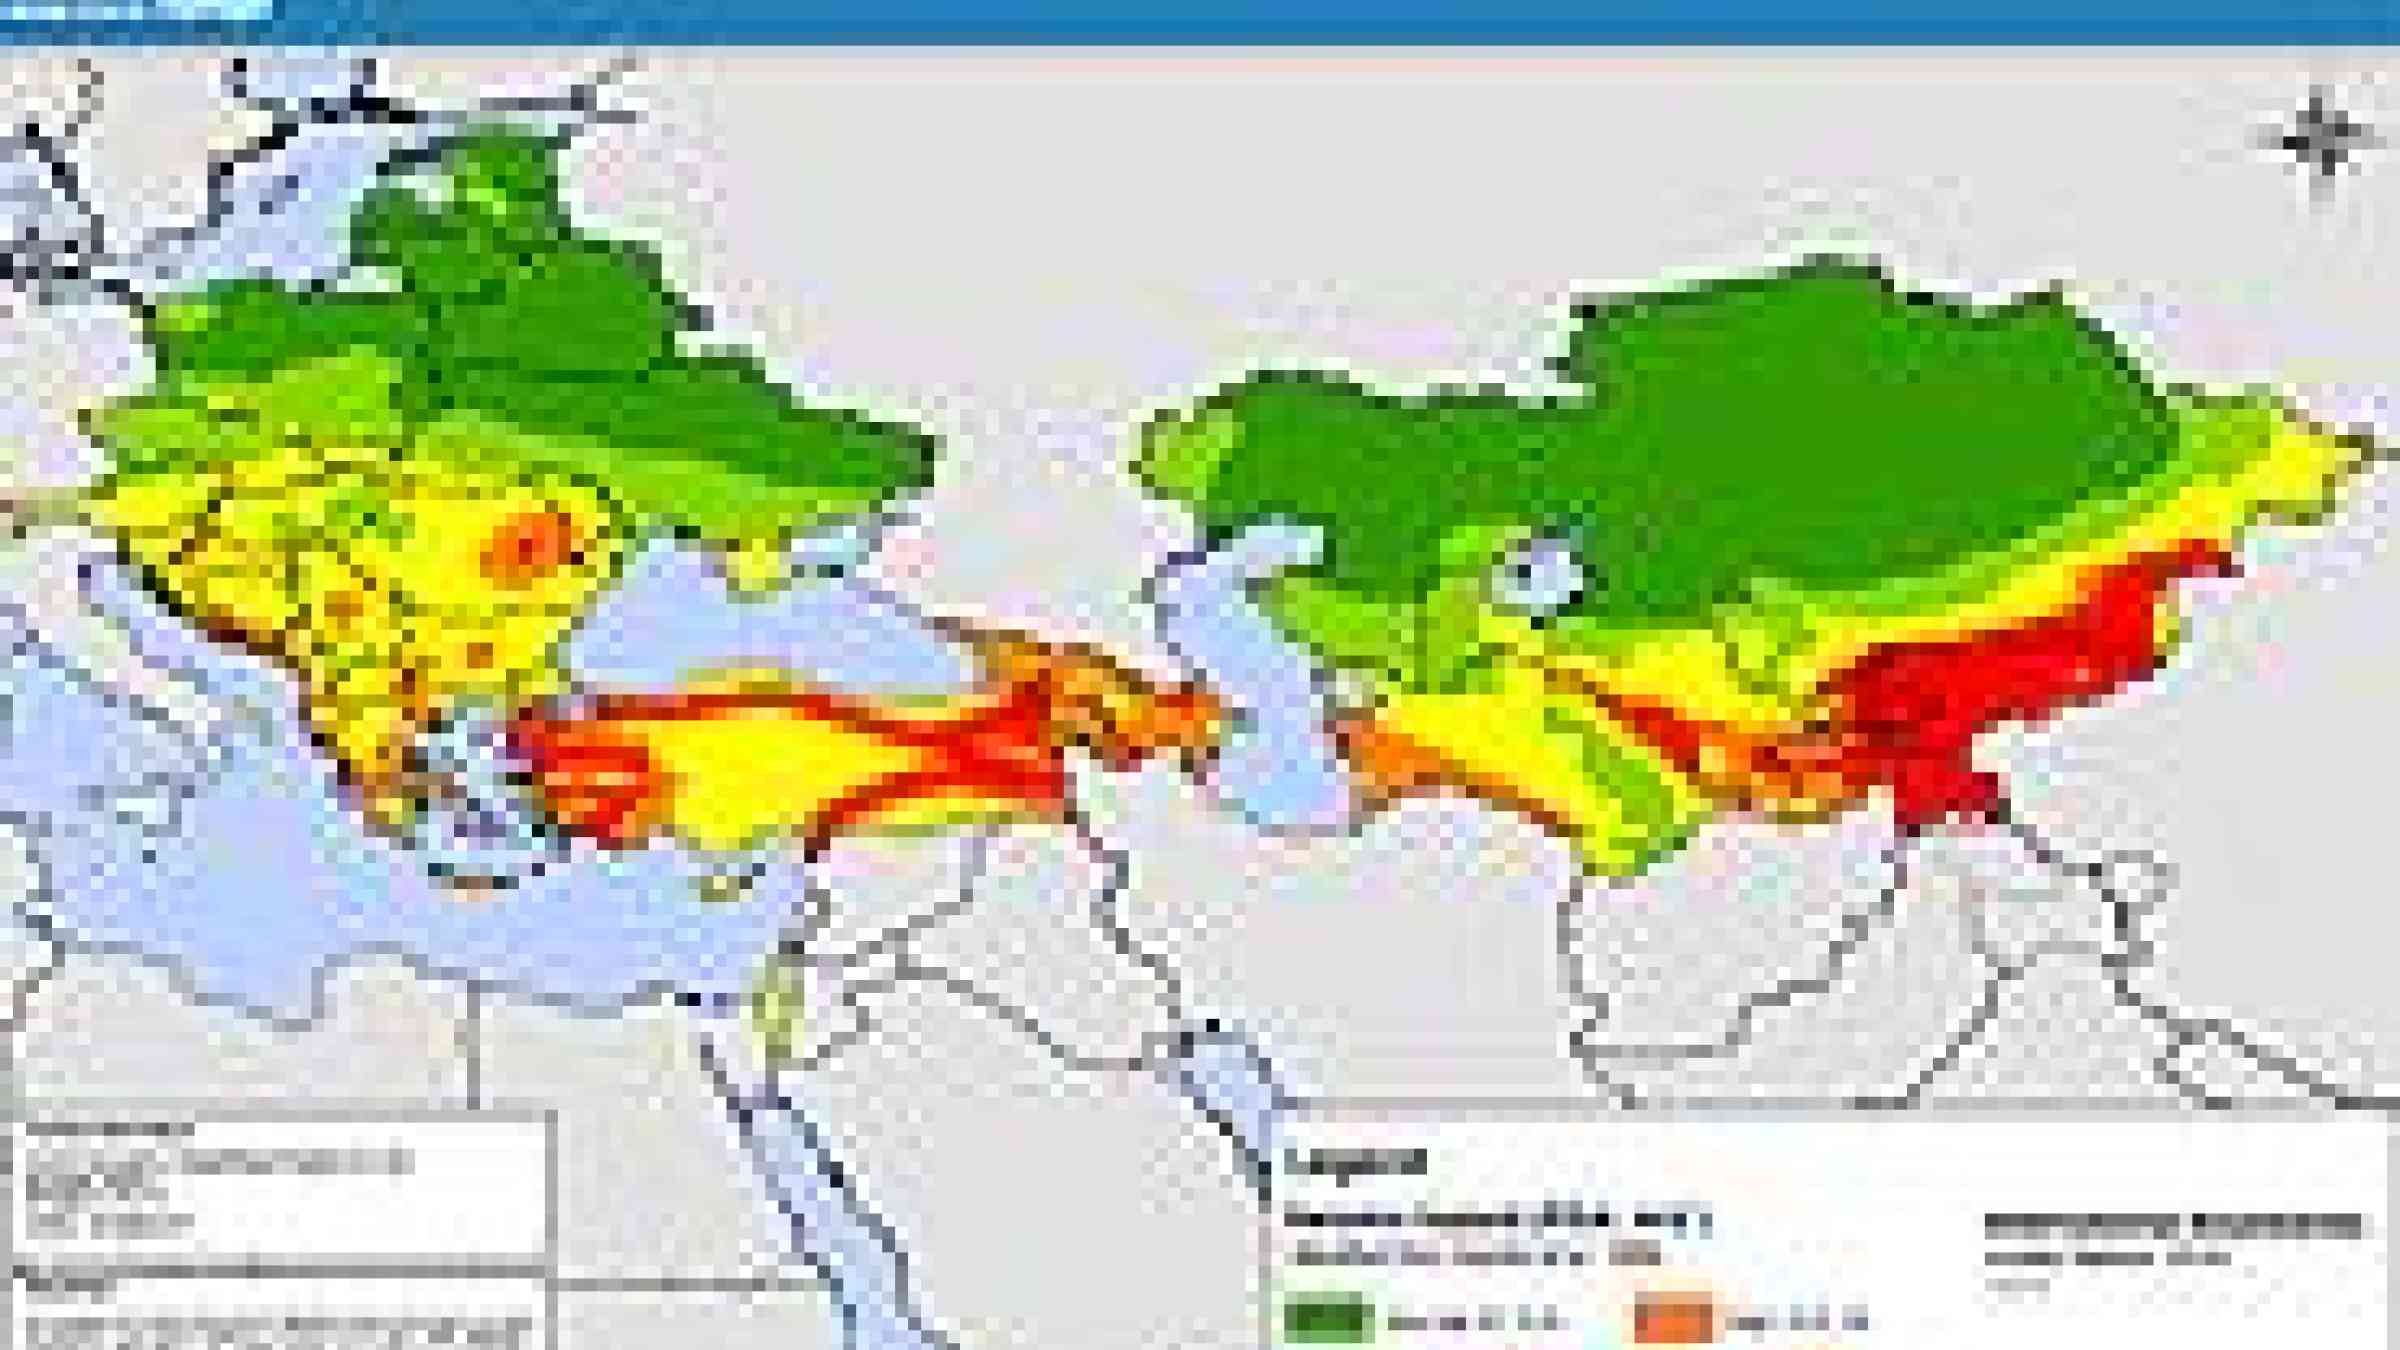 © WHO/Europe, Flood hazard distribution map: regional view